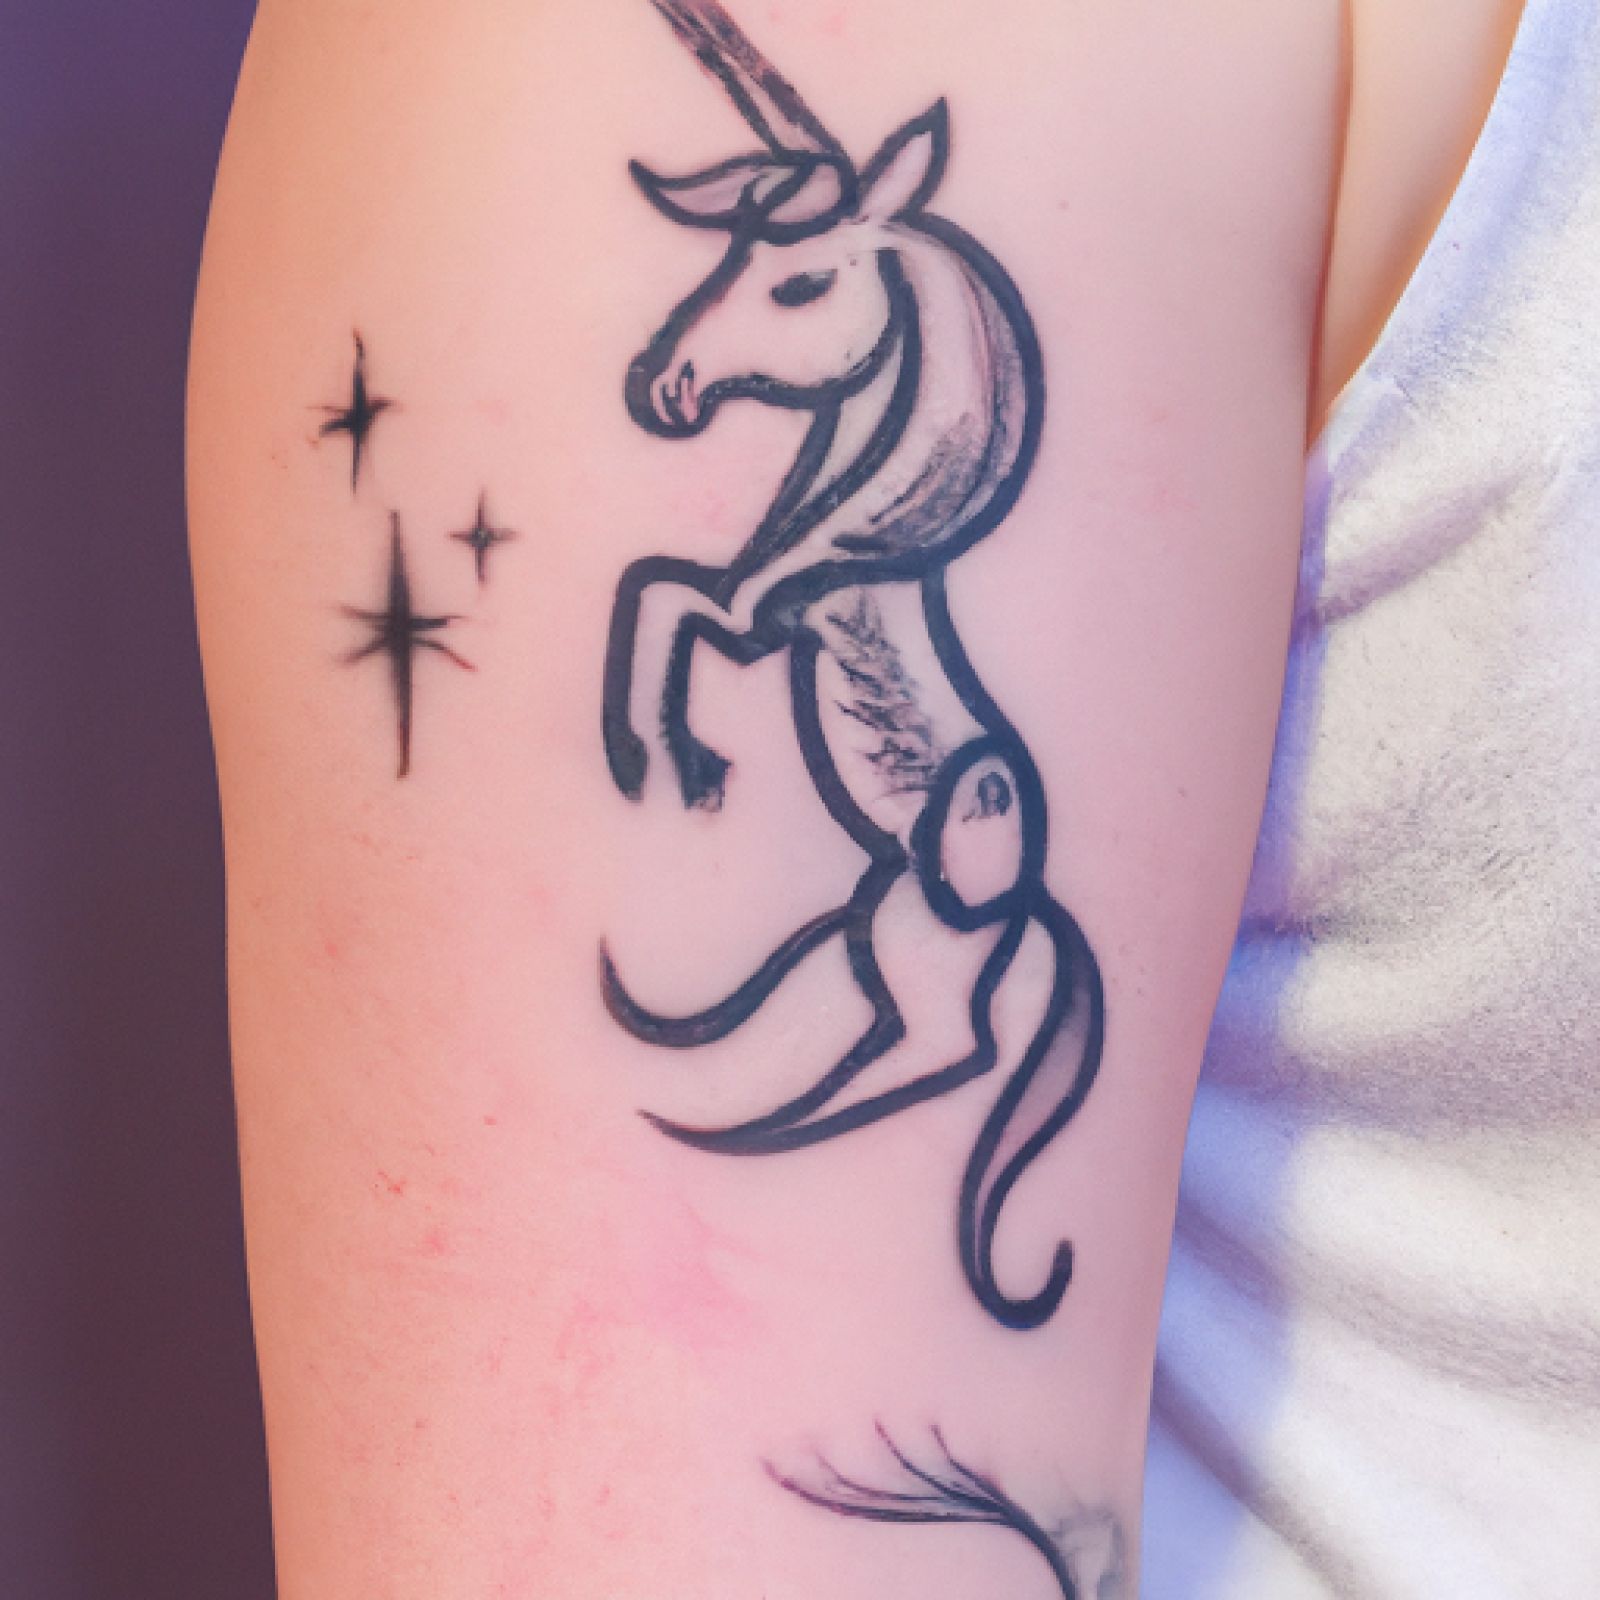 Unicorn tattoo on forearm for women